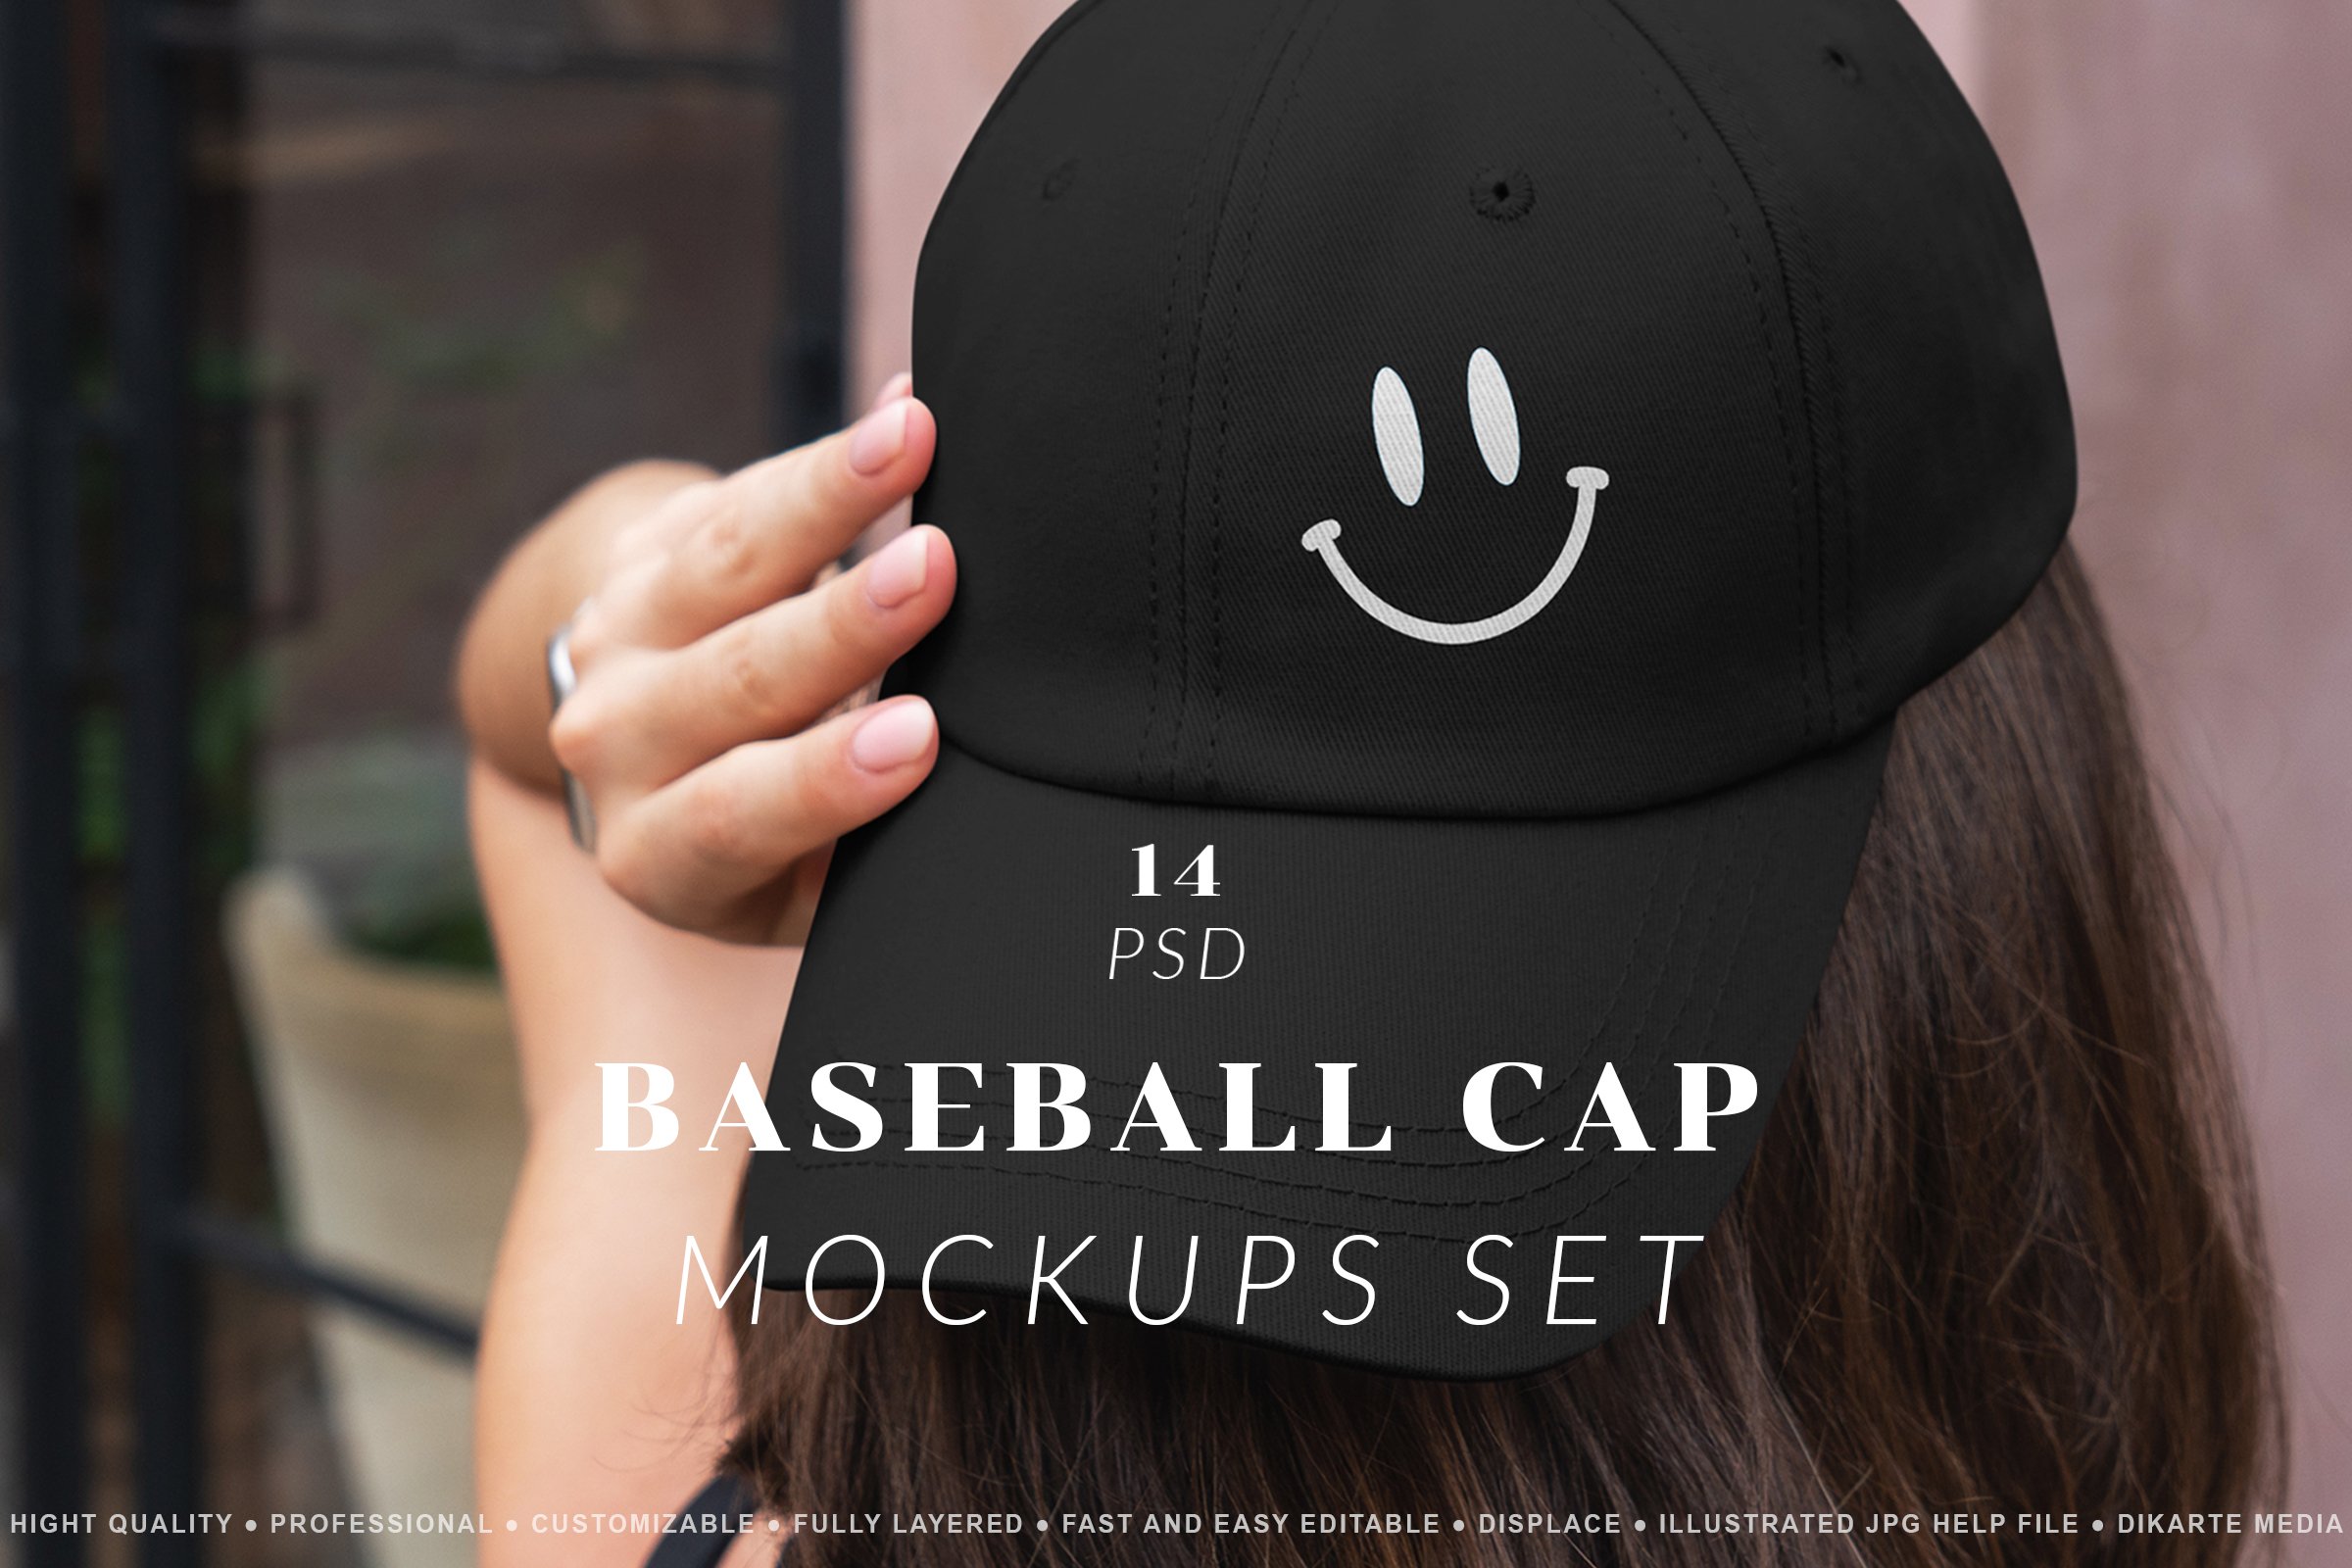 Baseball Cap Mockups Set cover image.